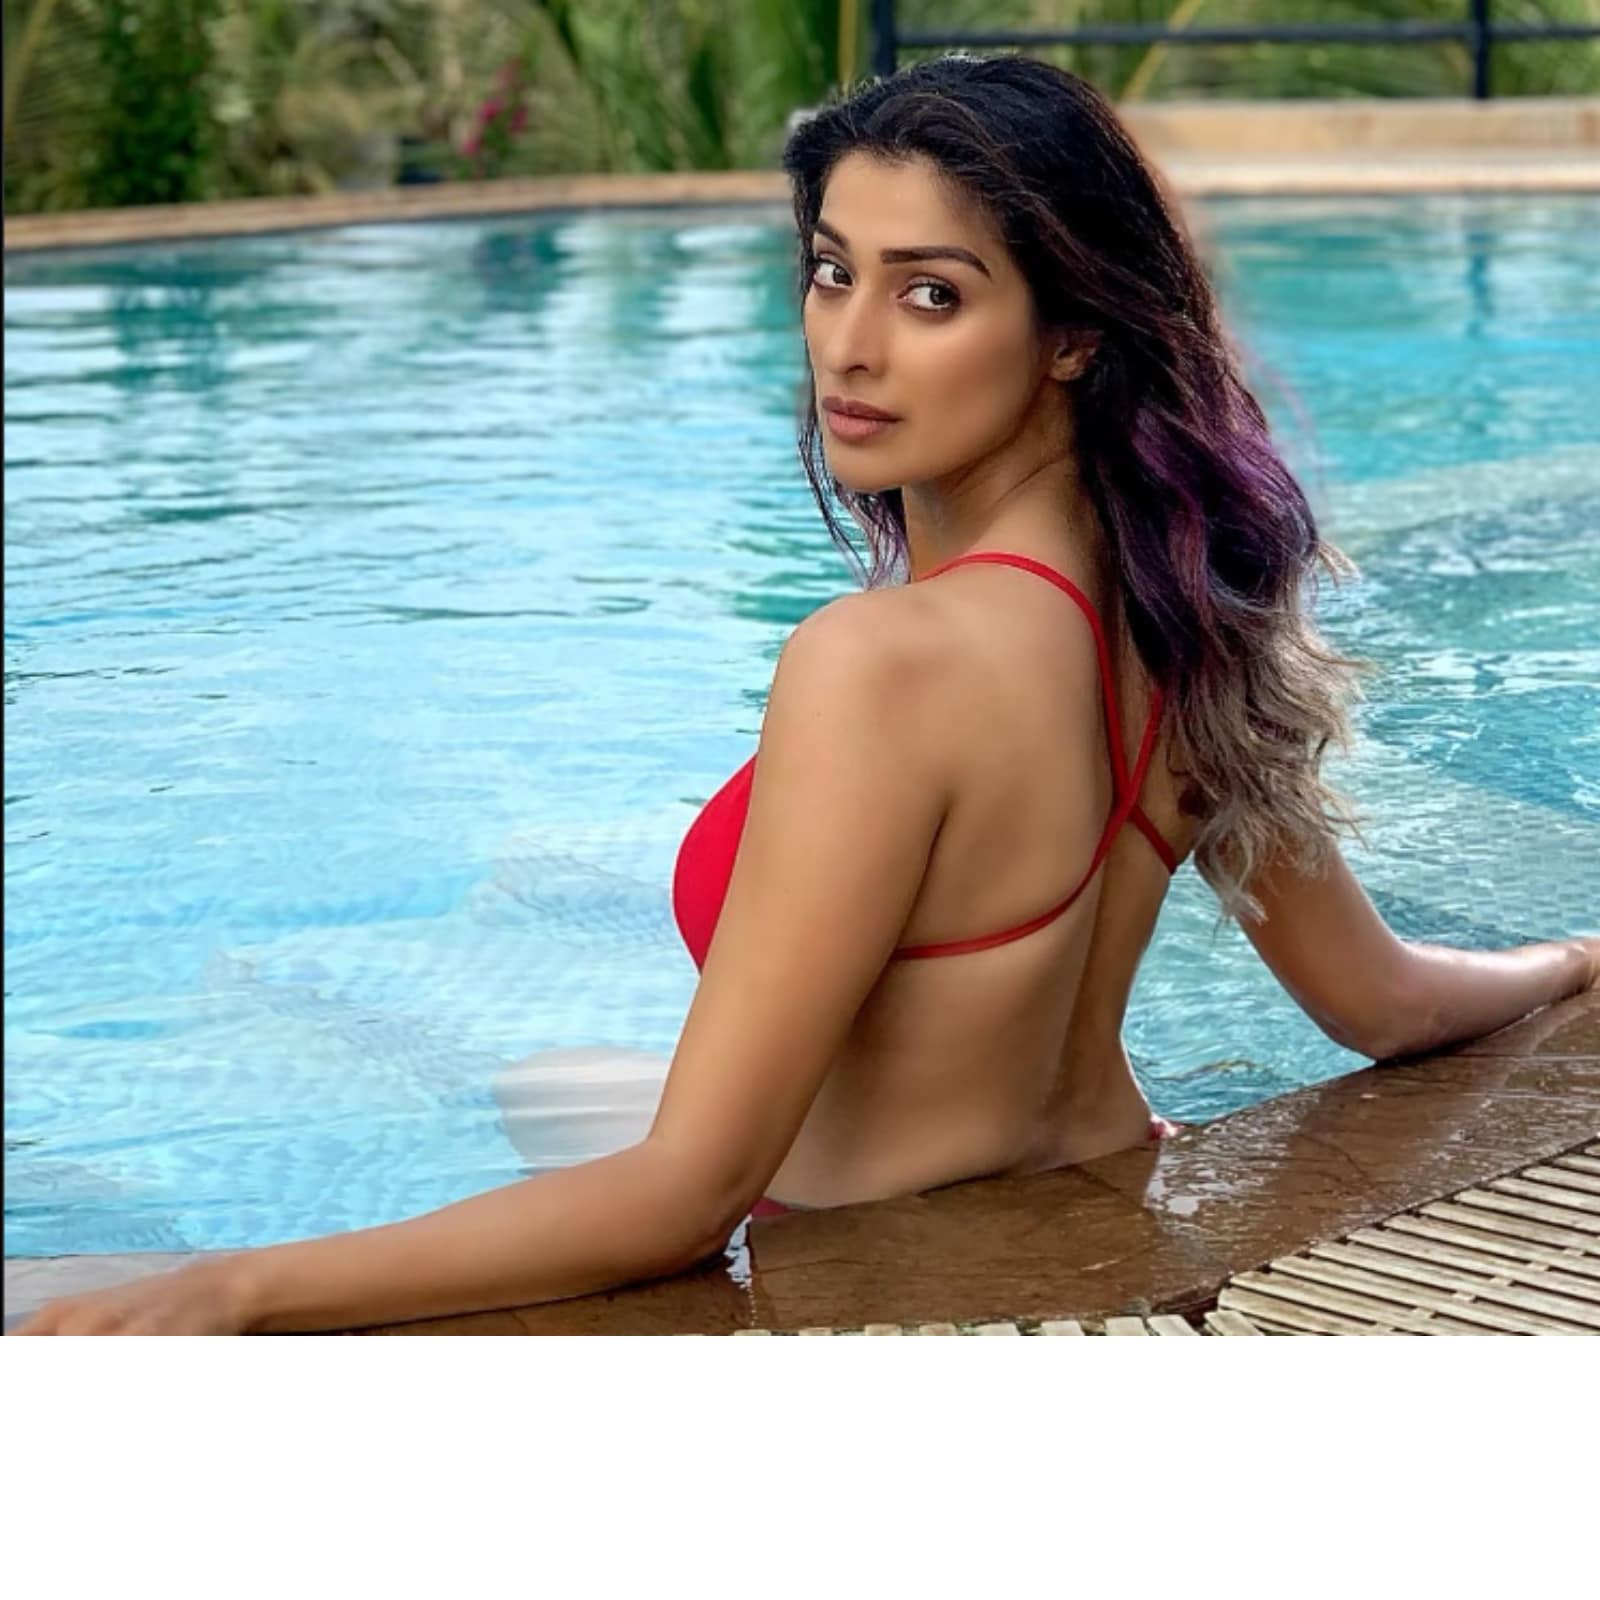 Lakshmi Rai Sex Videos - Actress Rai Laxmi's Latest Bikini Photo Is Viral, Check It Out - News18